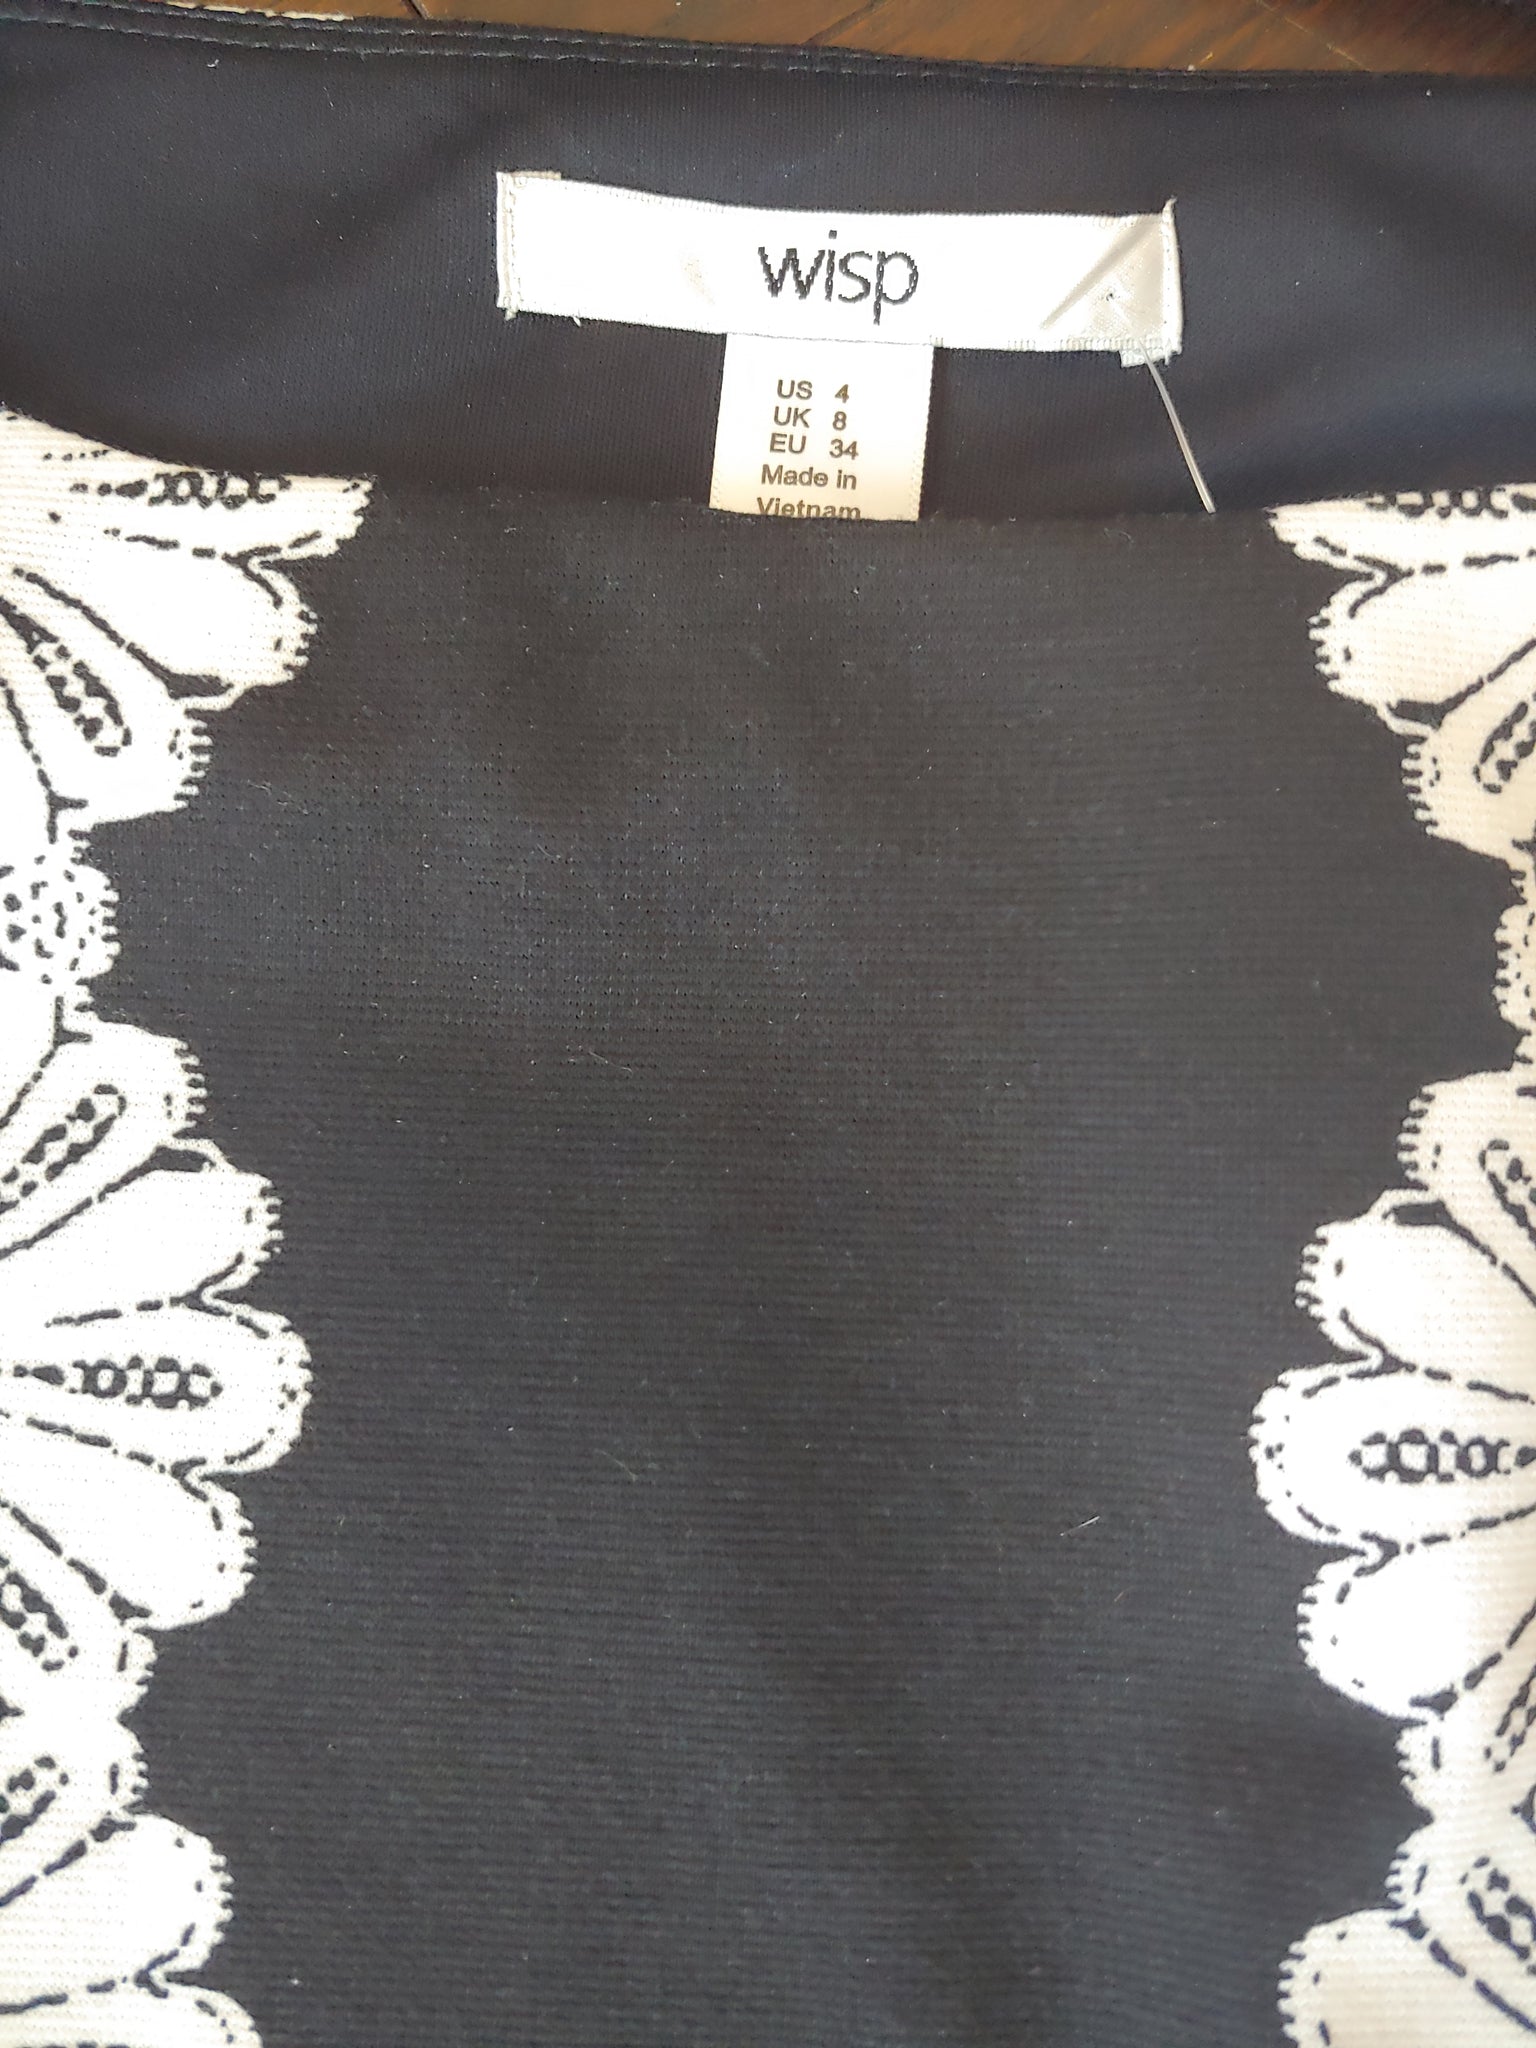 Black & White Wisp Dress, size 4